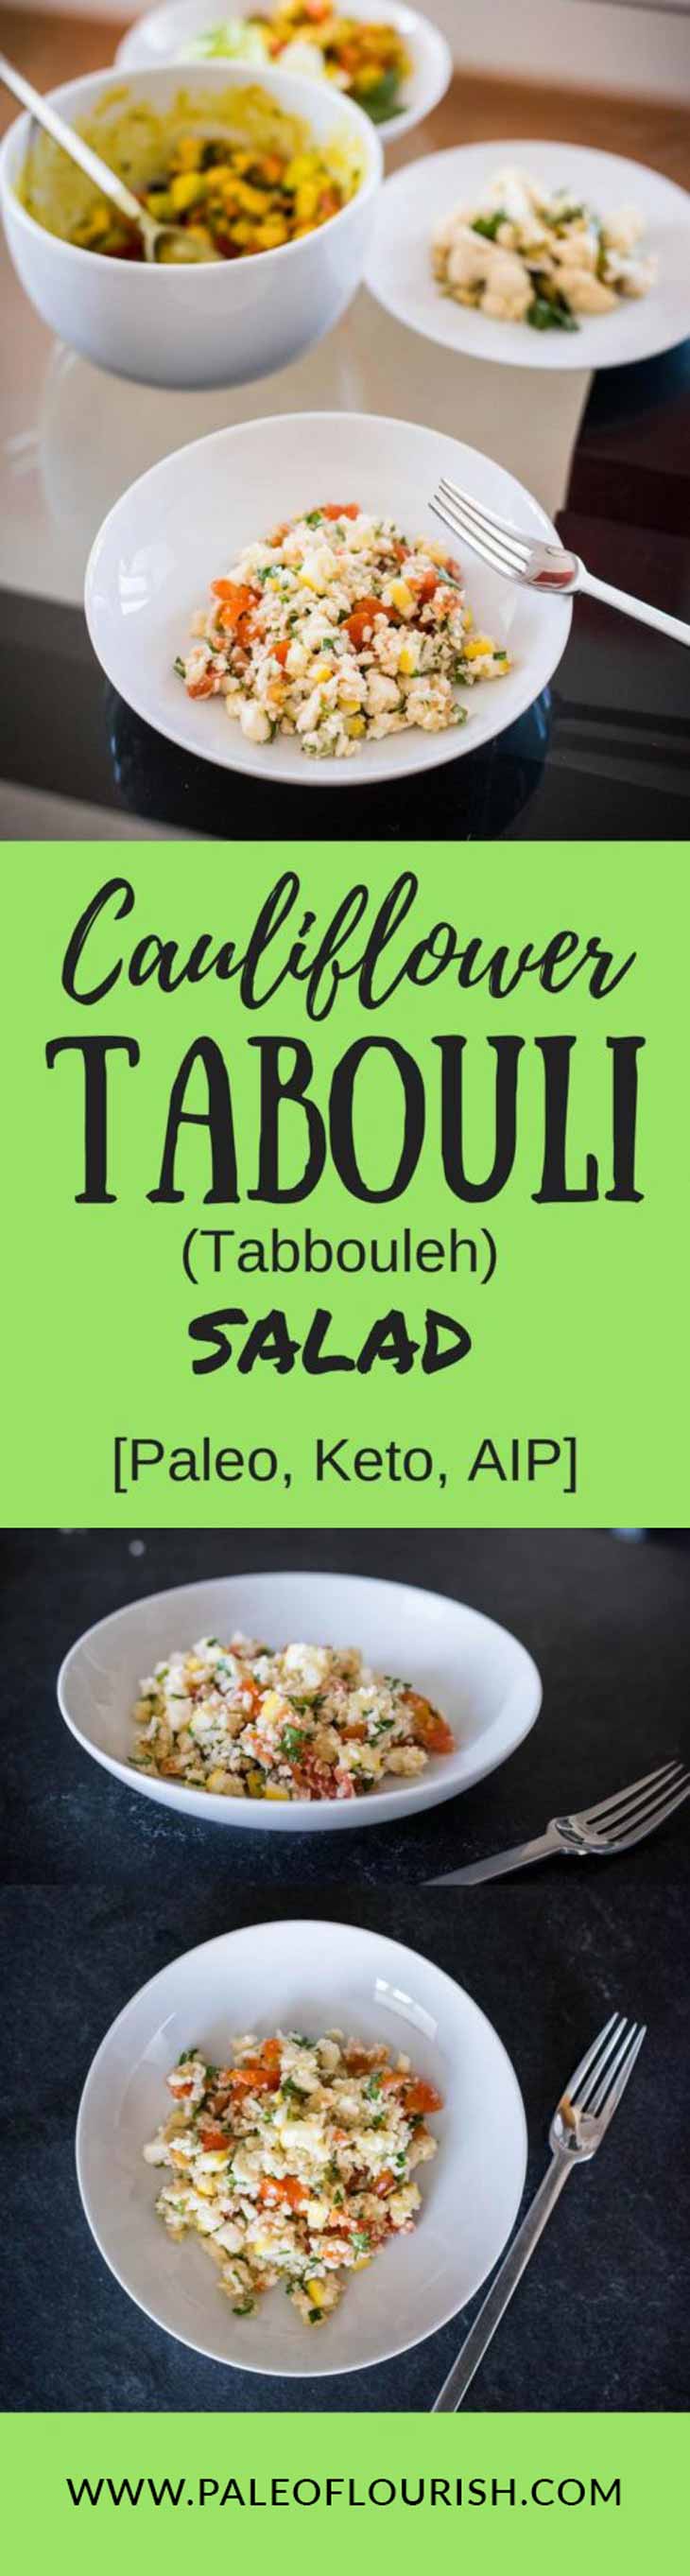 Cauliflower Tabouli (Tabbouleh) Salad Recipe [Paleo, Keto, AIP] #paleo #keto #aip #recipes -  https://paleoflourish.com/cauliflower-tabouli-salad-recipe-paleo-keto-aip